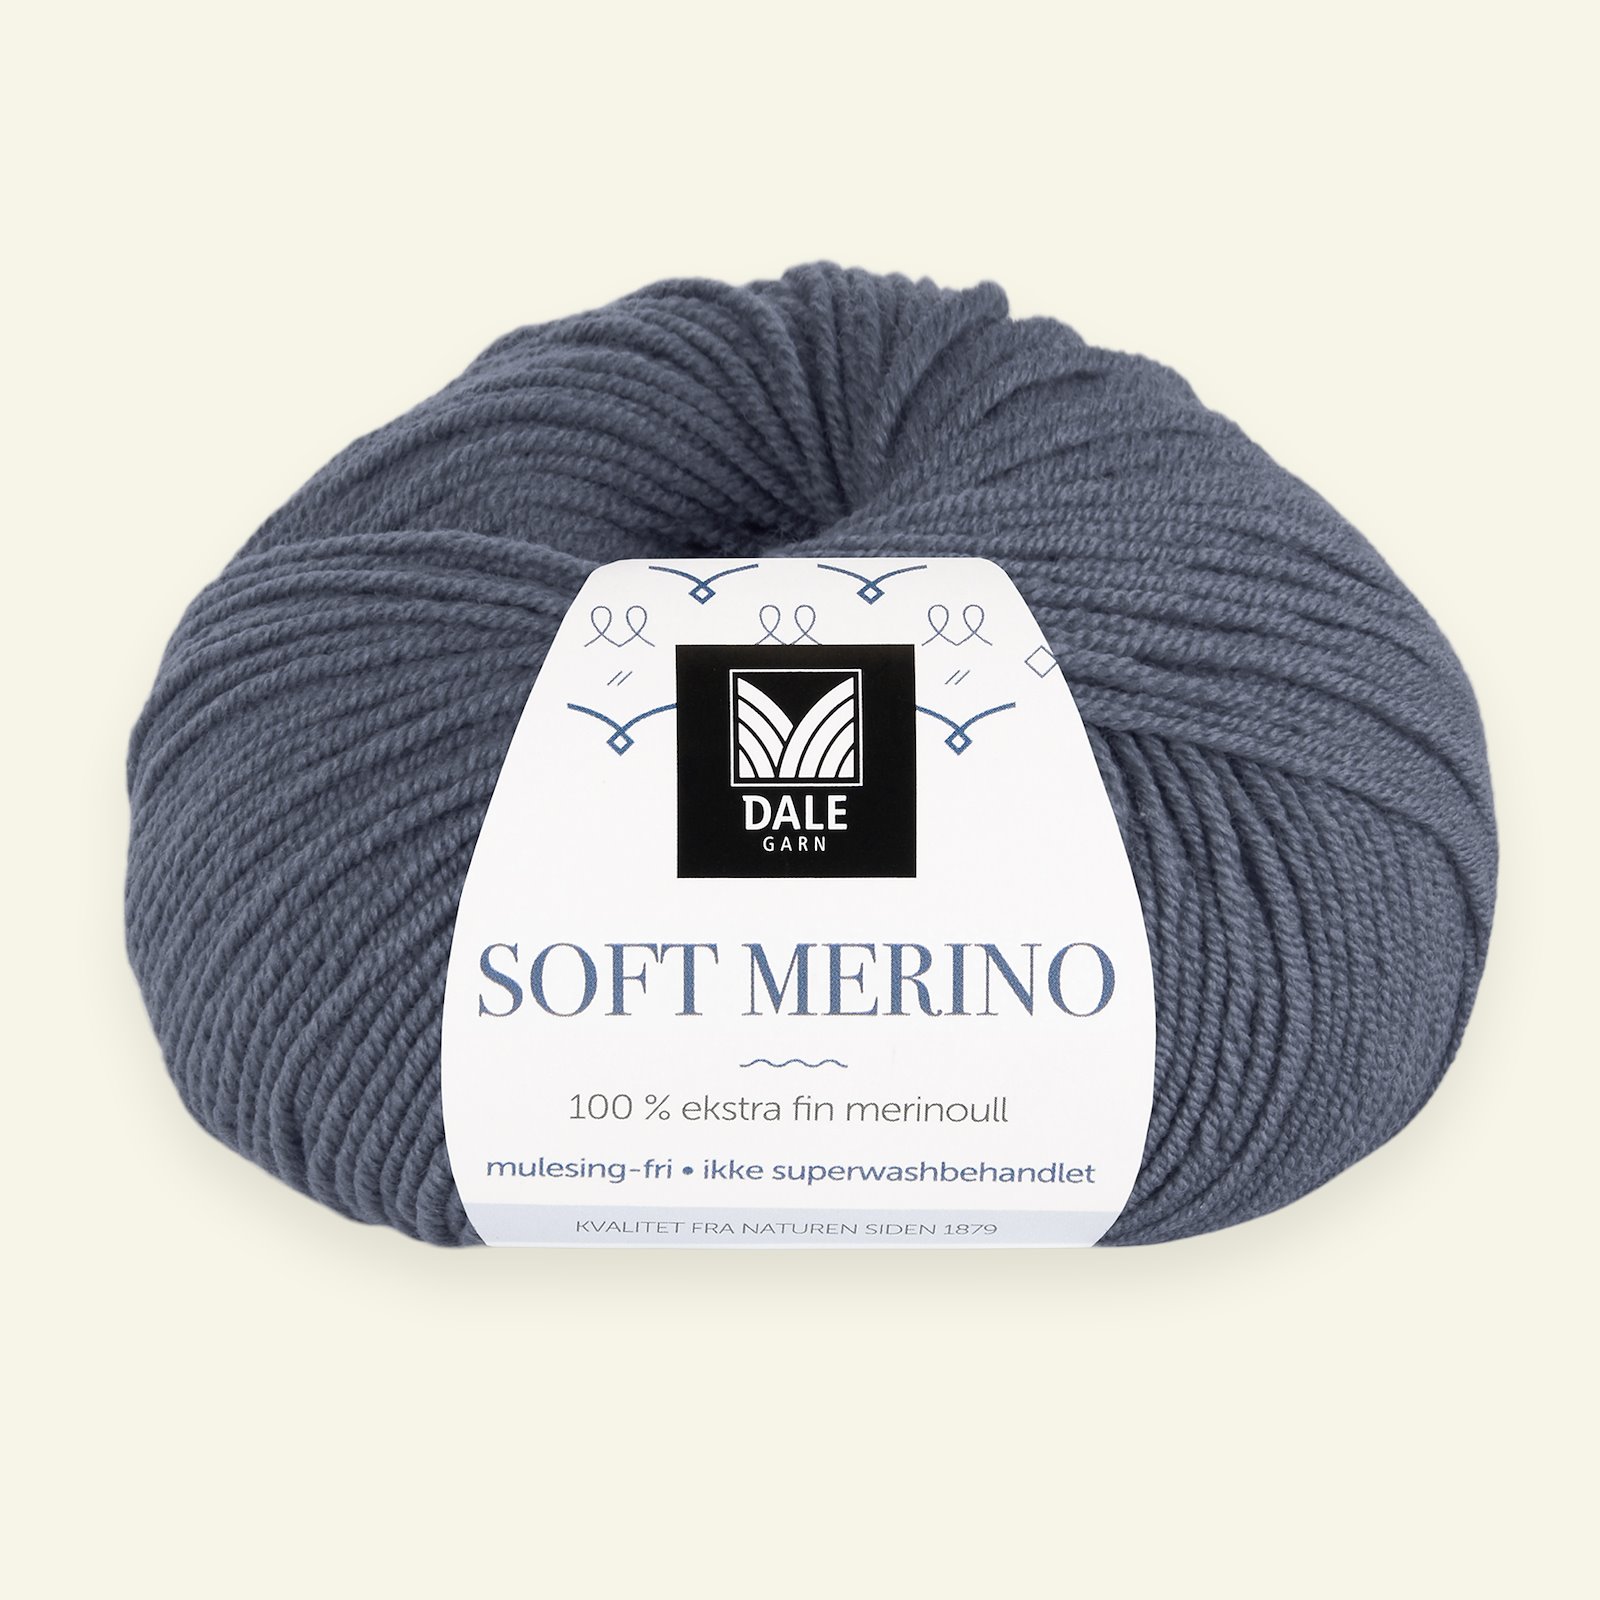 Dale Garn, 100% extra fine merino wool yarn, "Soft Merino", dark greyblue (3014) 90000335_pack